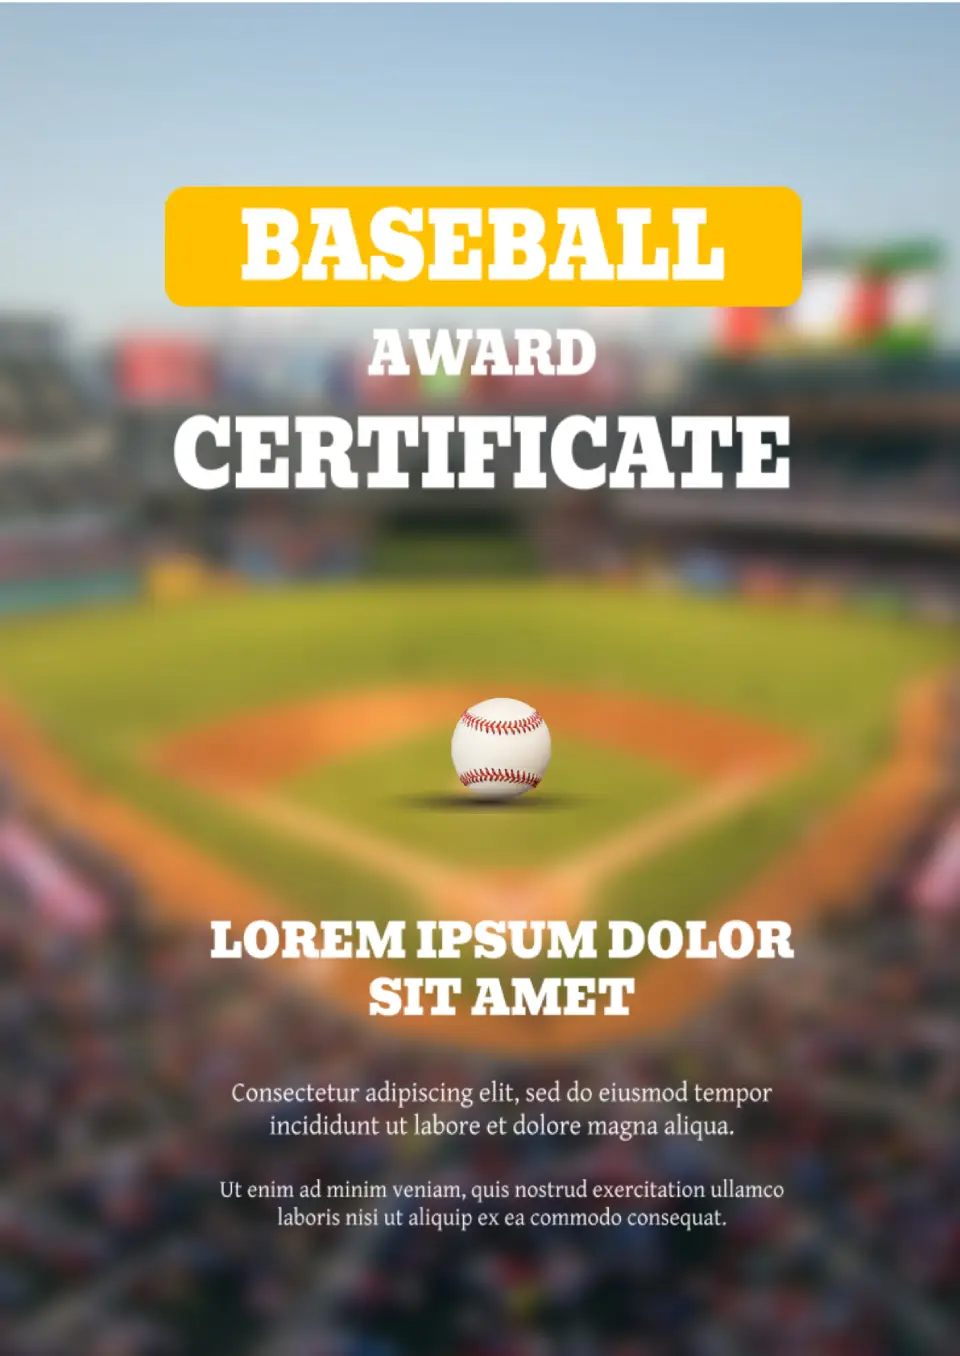 Baseball Award Certificate Template for Google Docs